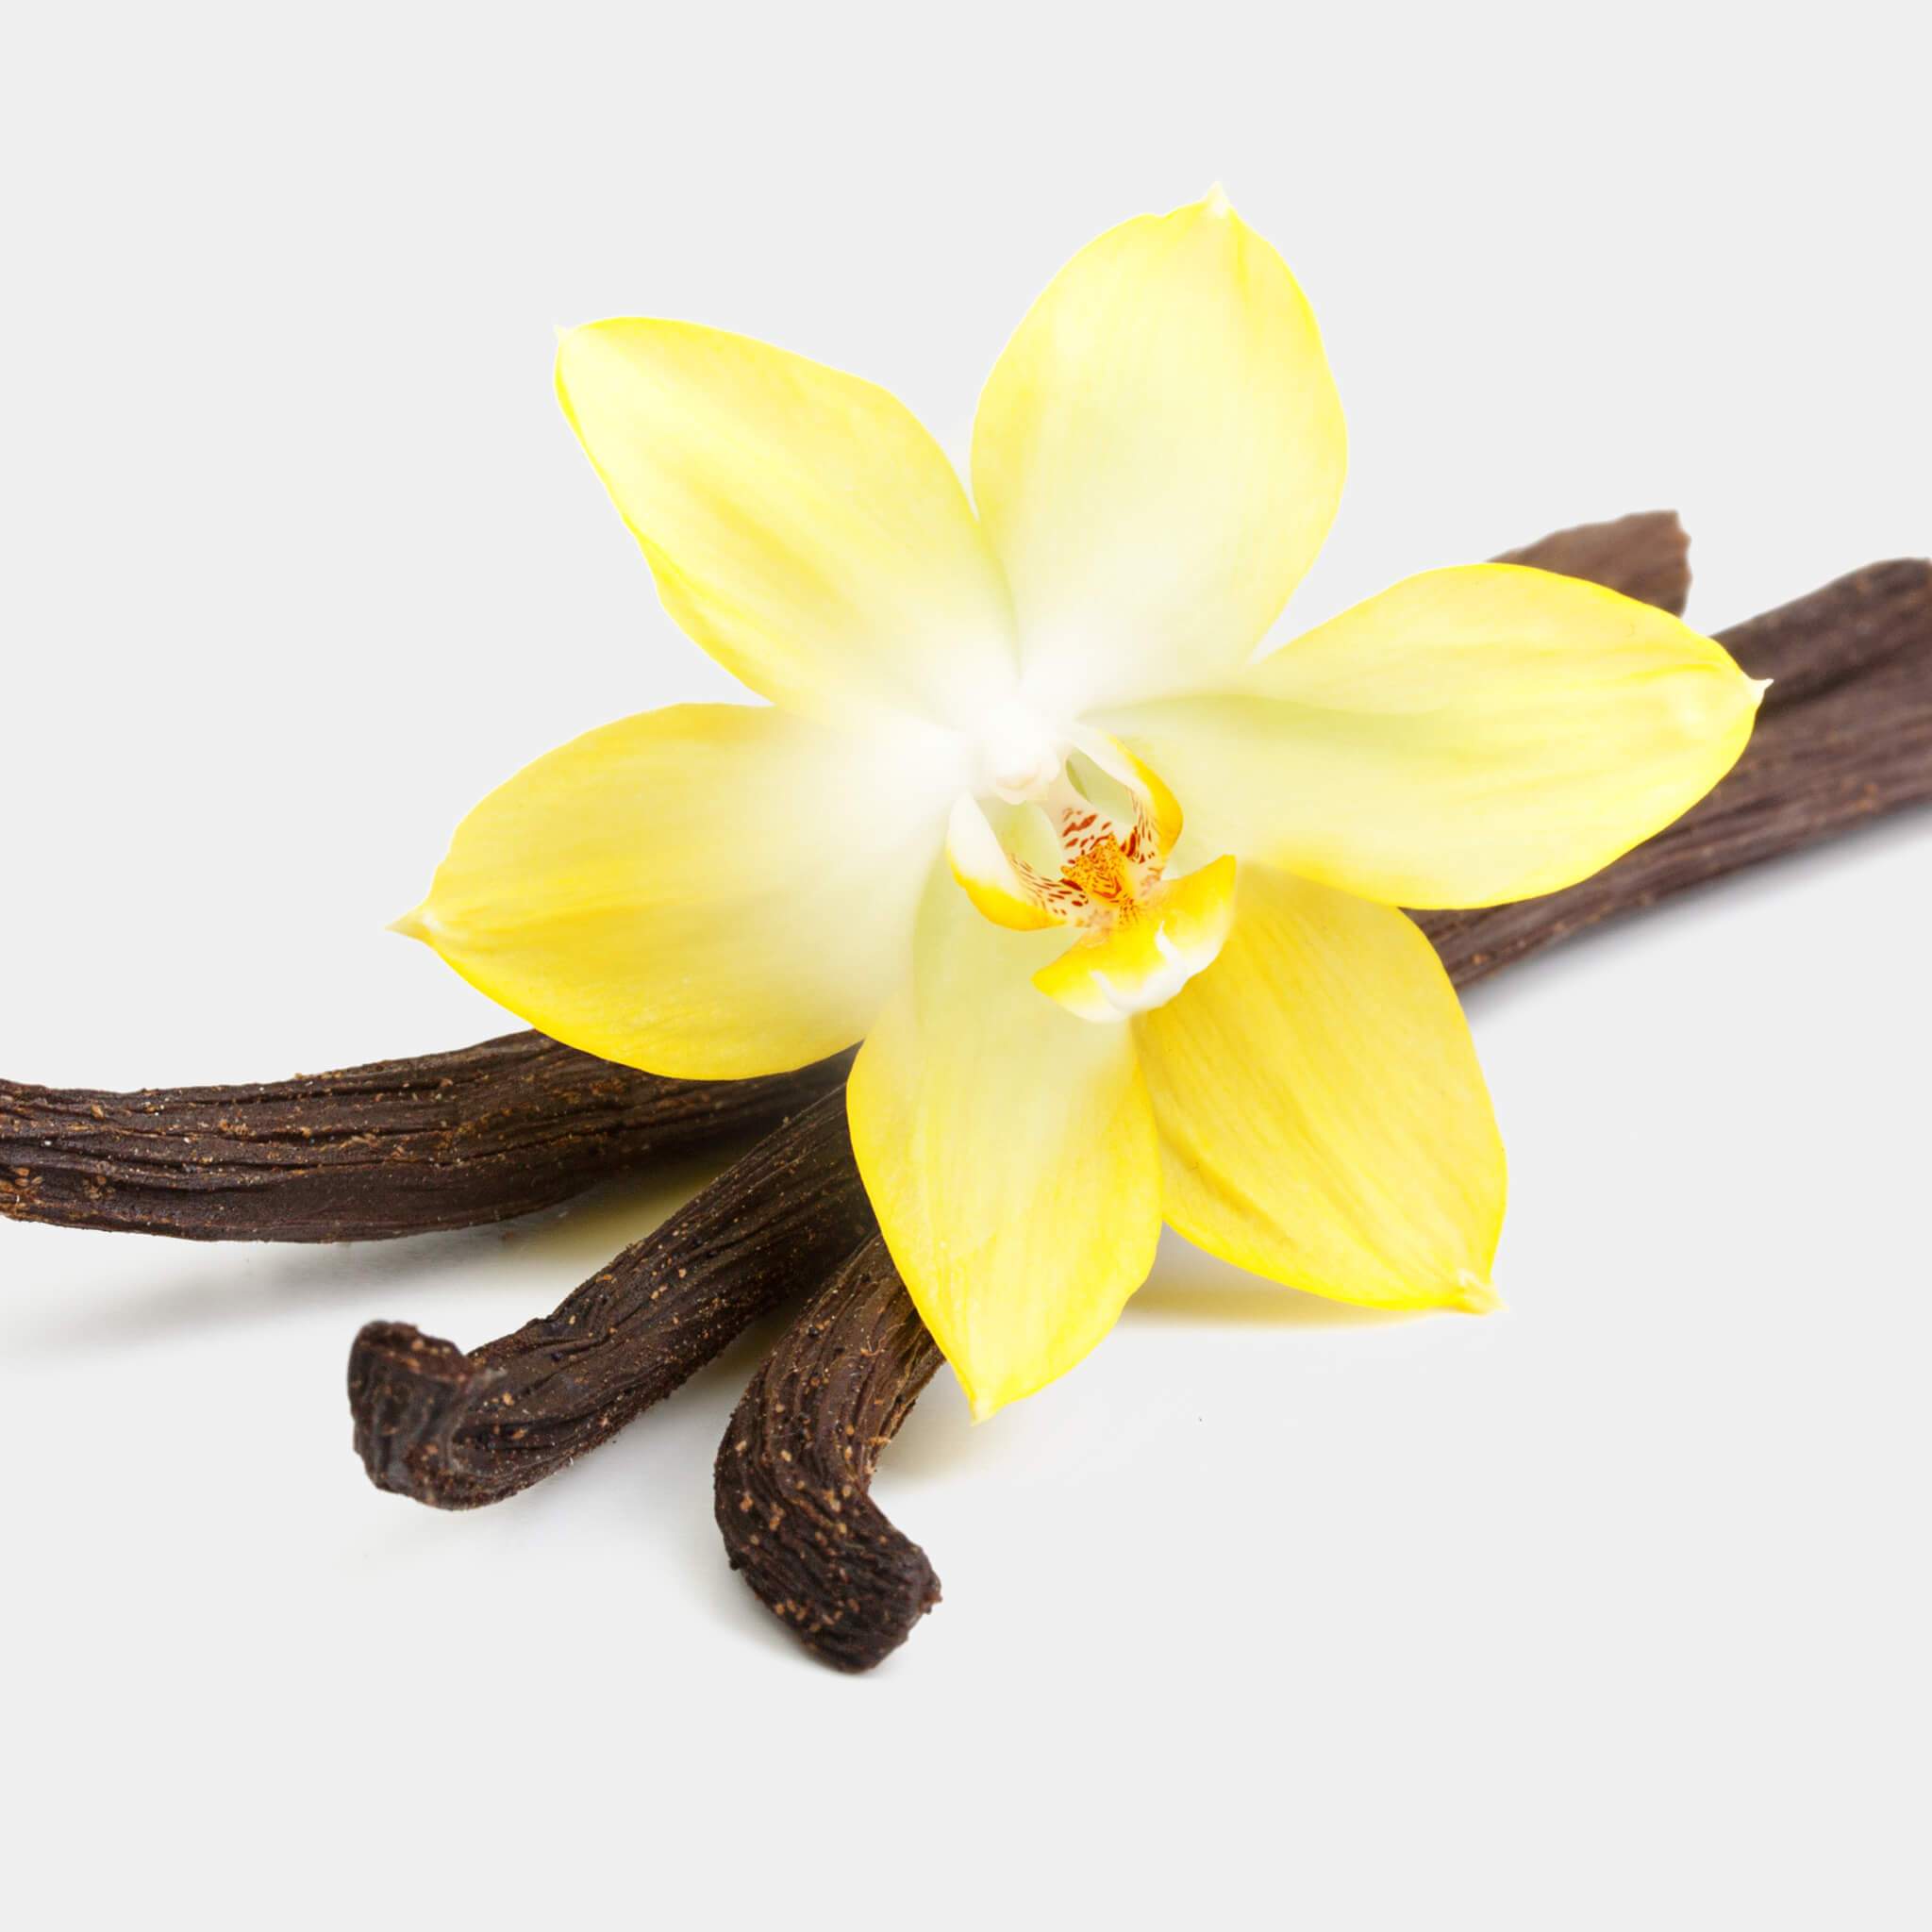 Product Page Key Ingredients: Vanilla Planifolia